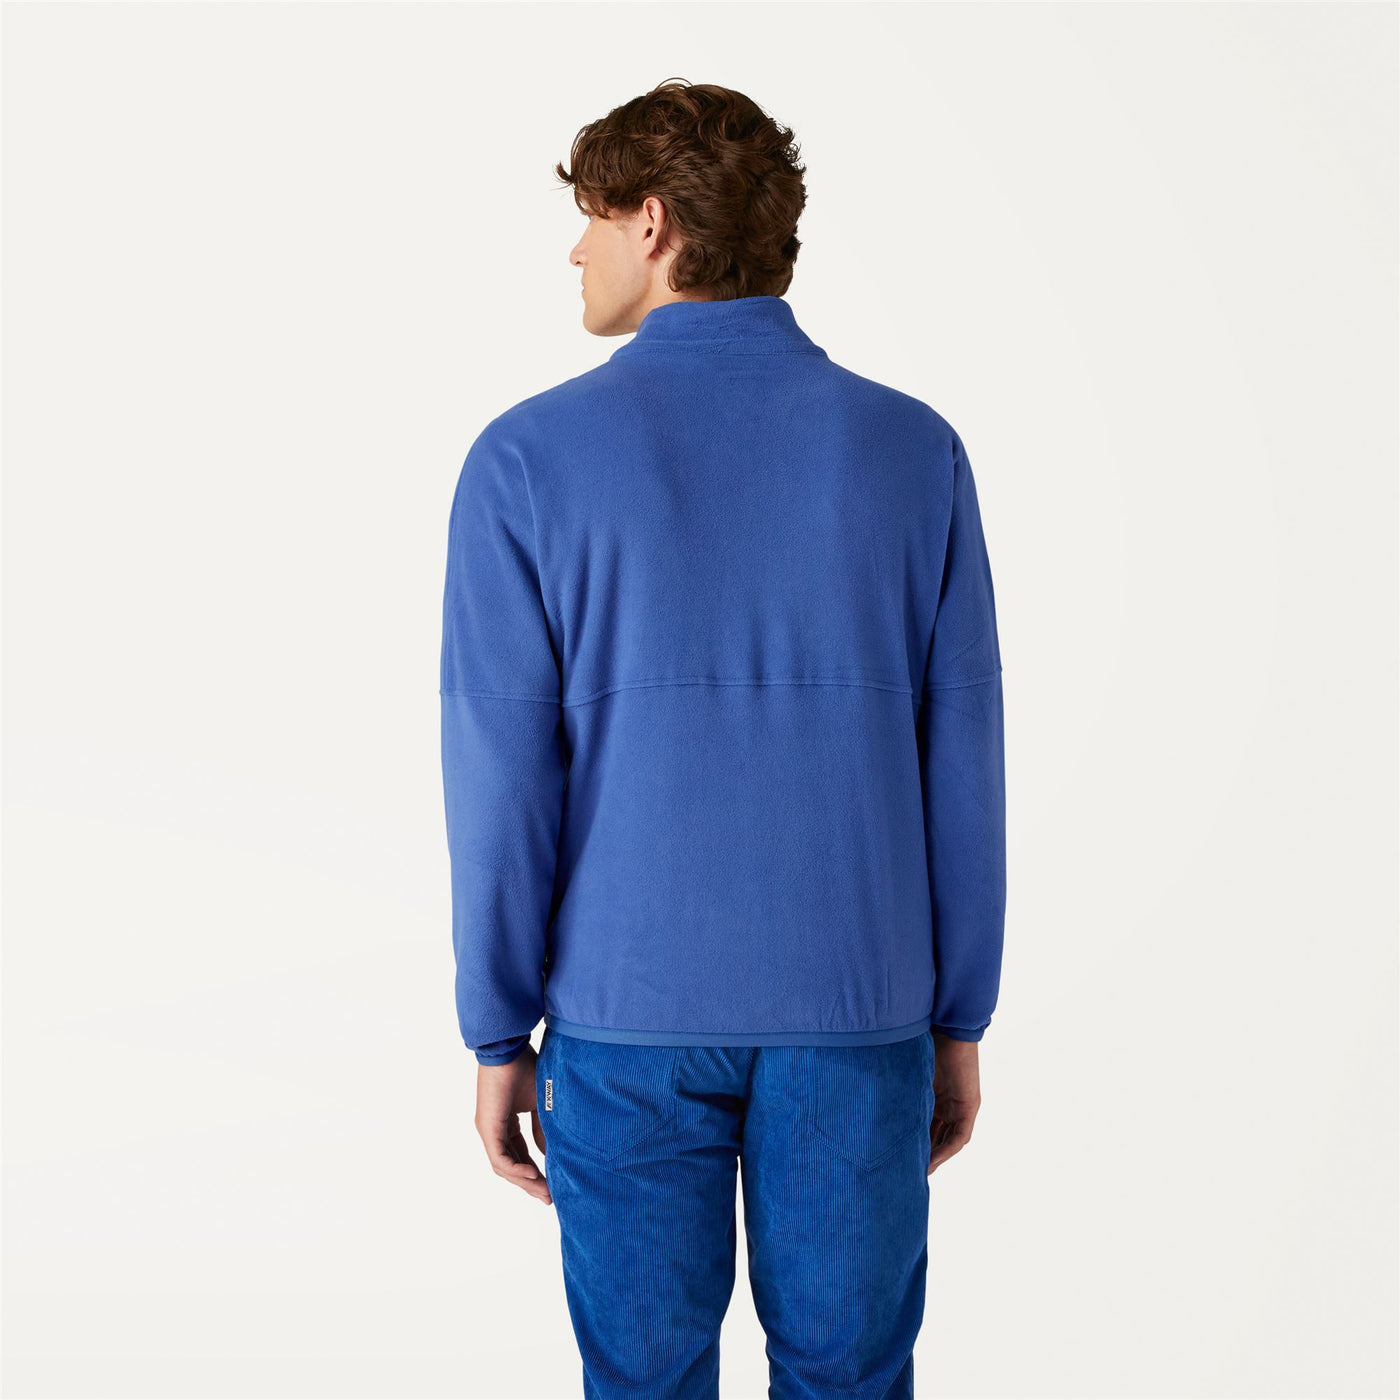 Fleece Unisex LE VRAI 2.1 AMIABLE ARNAS Jacket BLUE ROYAL MARINE Dressed Front Double		